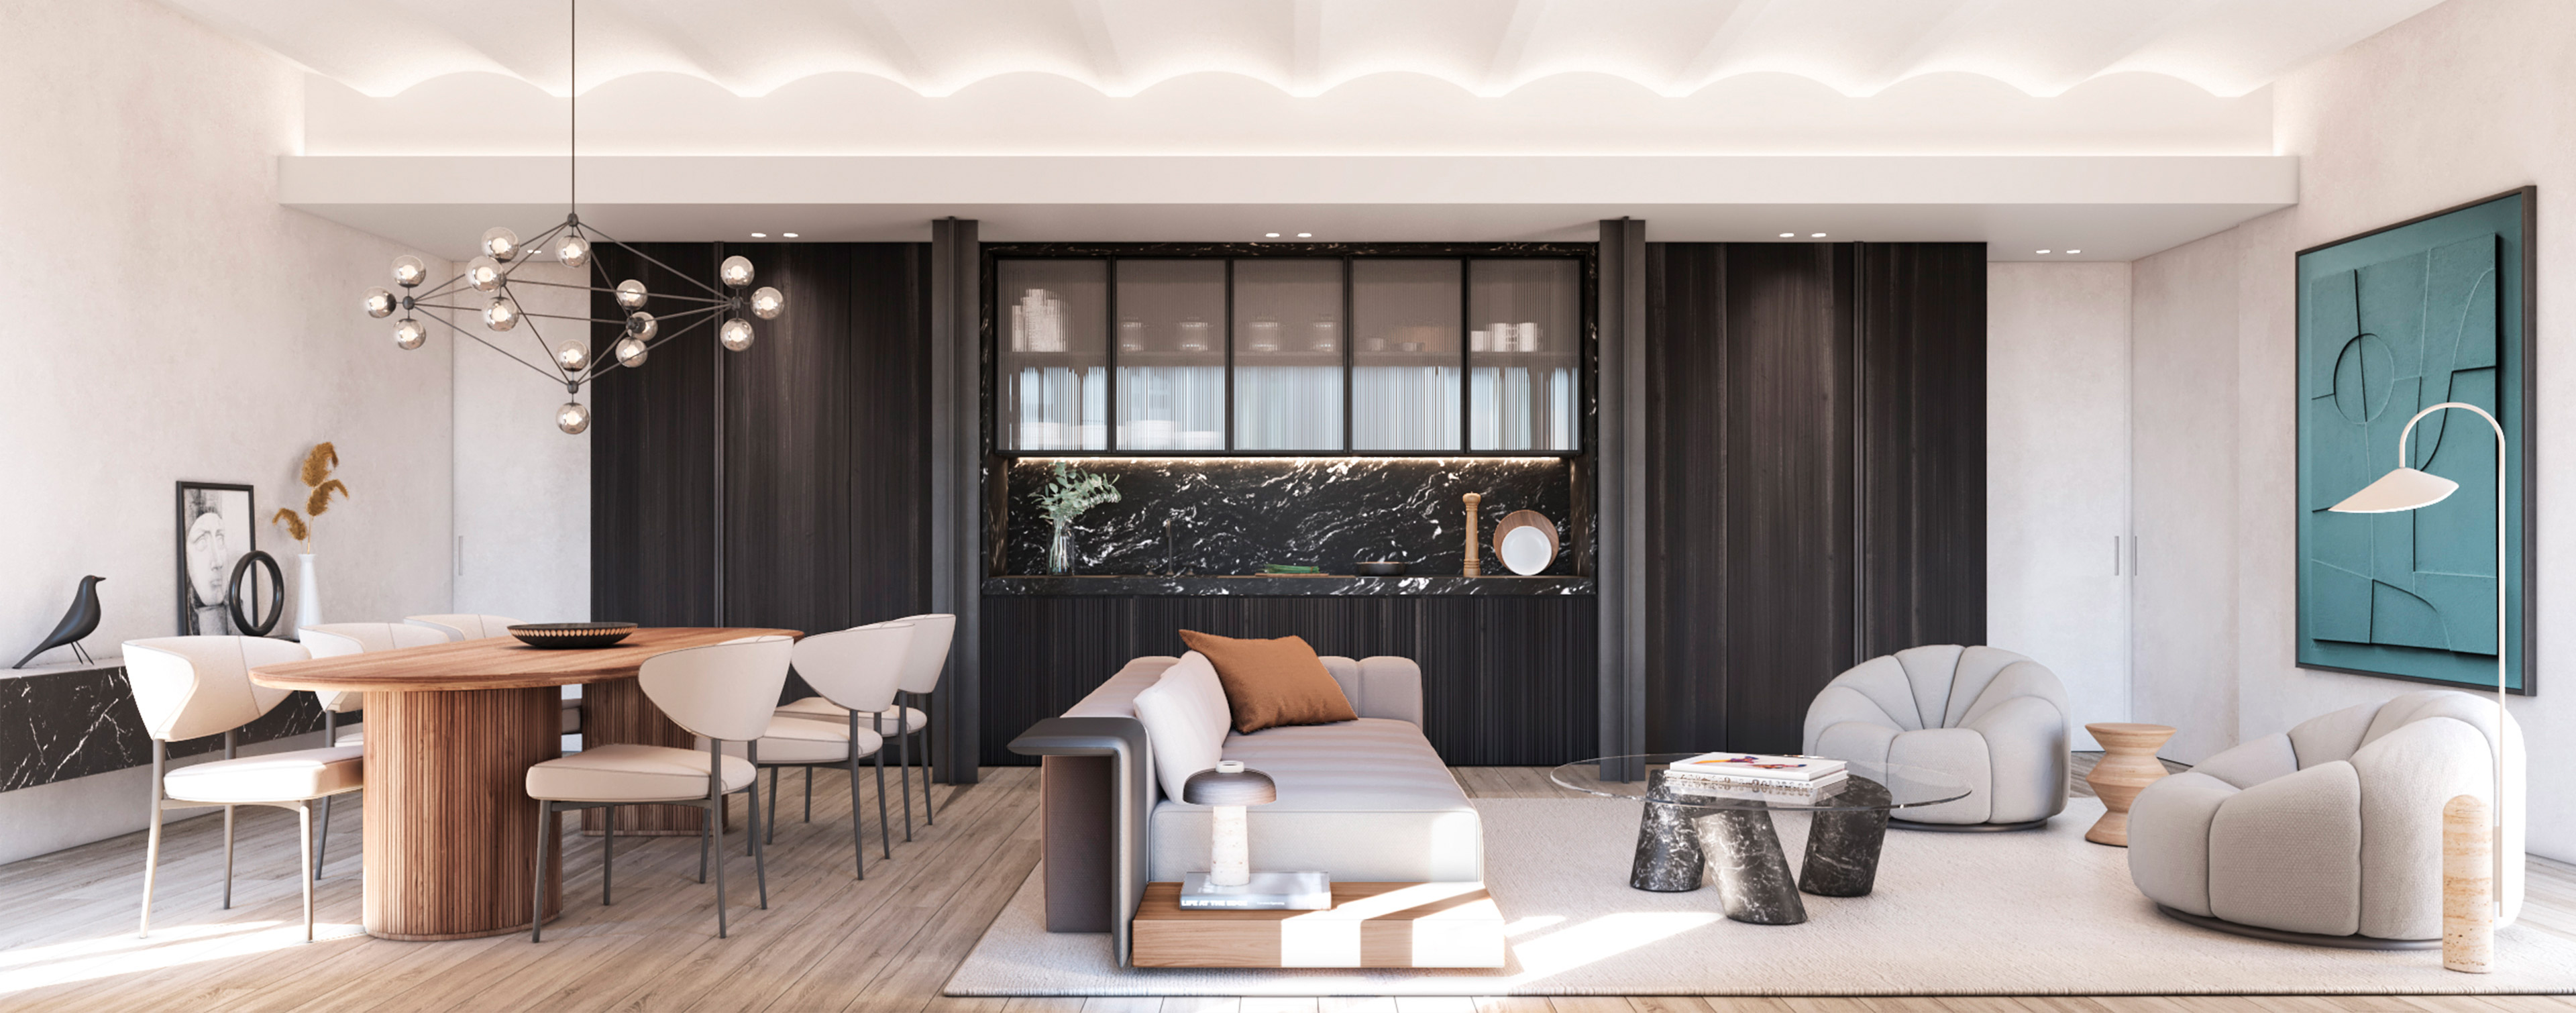 luv studio luxury architects barcelona rambla catalunya apartment IMG 01 - LUV Studio - Architecture & Design - Barcelona